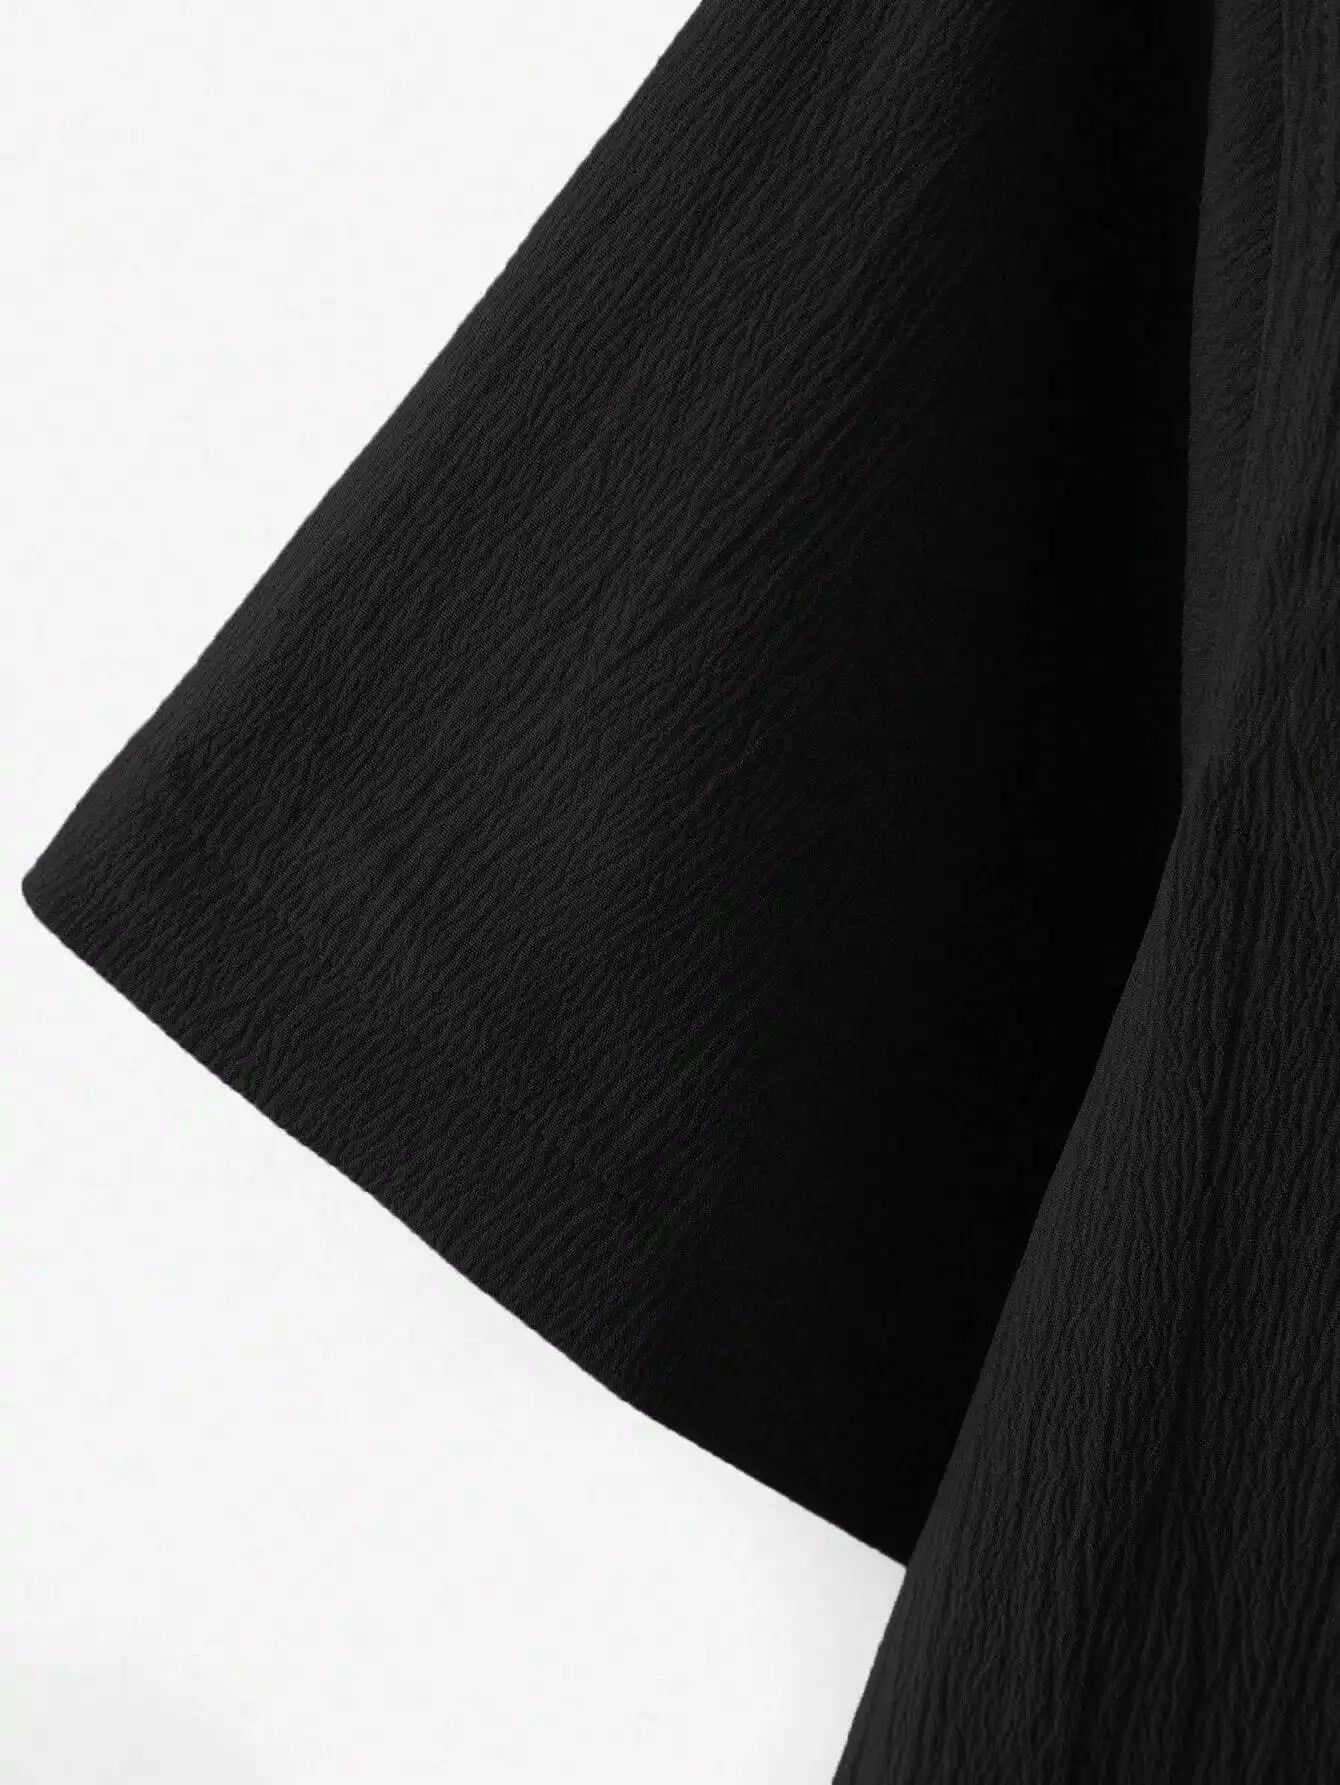 Plain Pattern Black Color Men's Simple  Cotton Casual Shirt Half Sleeve available